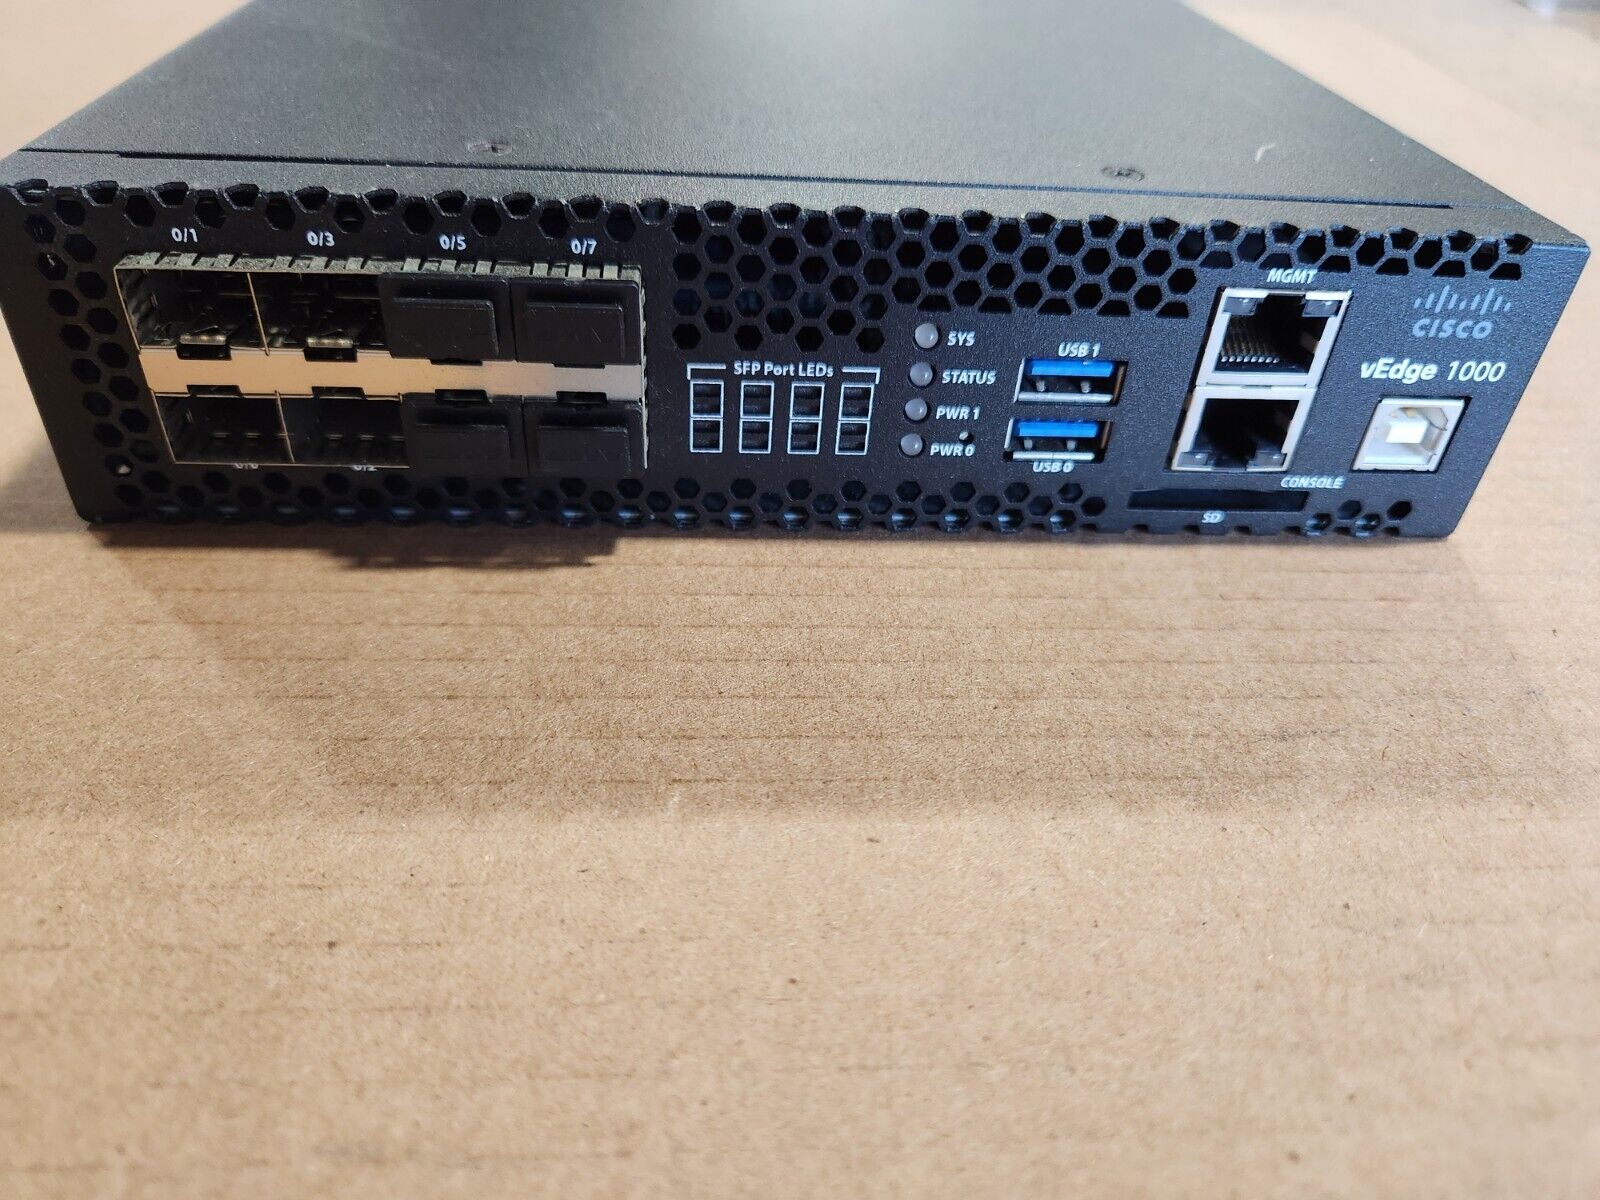 Cisco VEdge 1000- AC-K9 WAN Router 